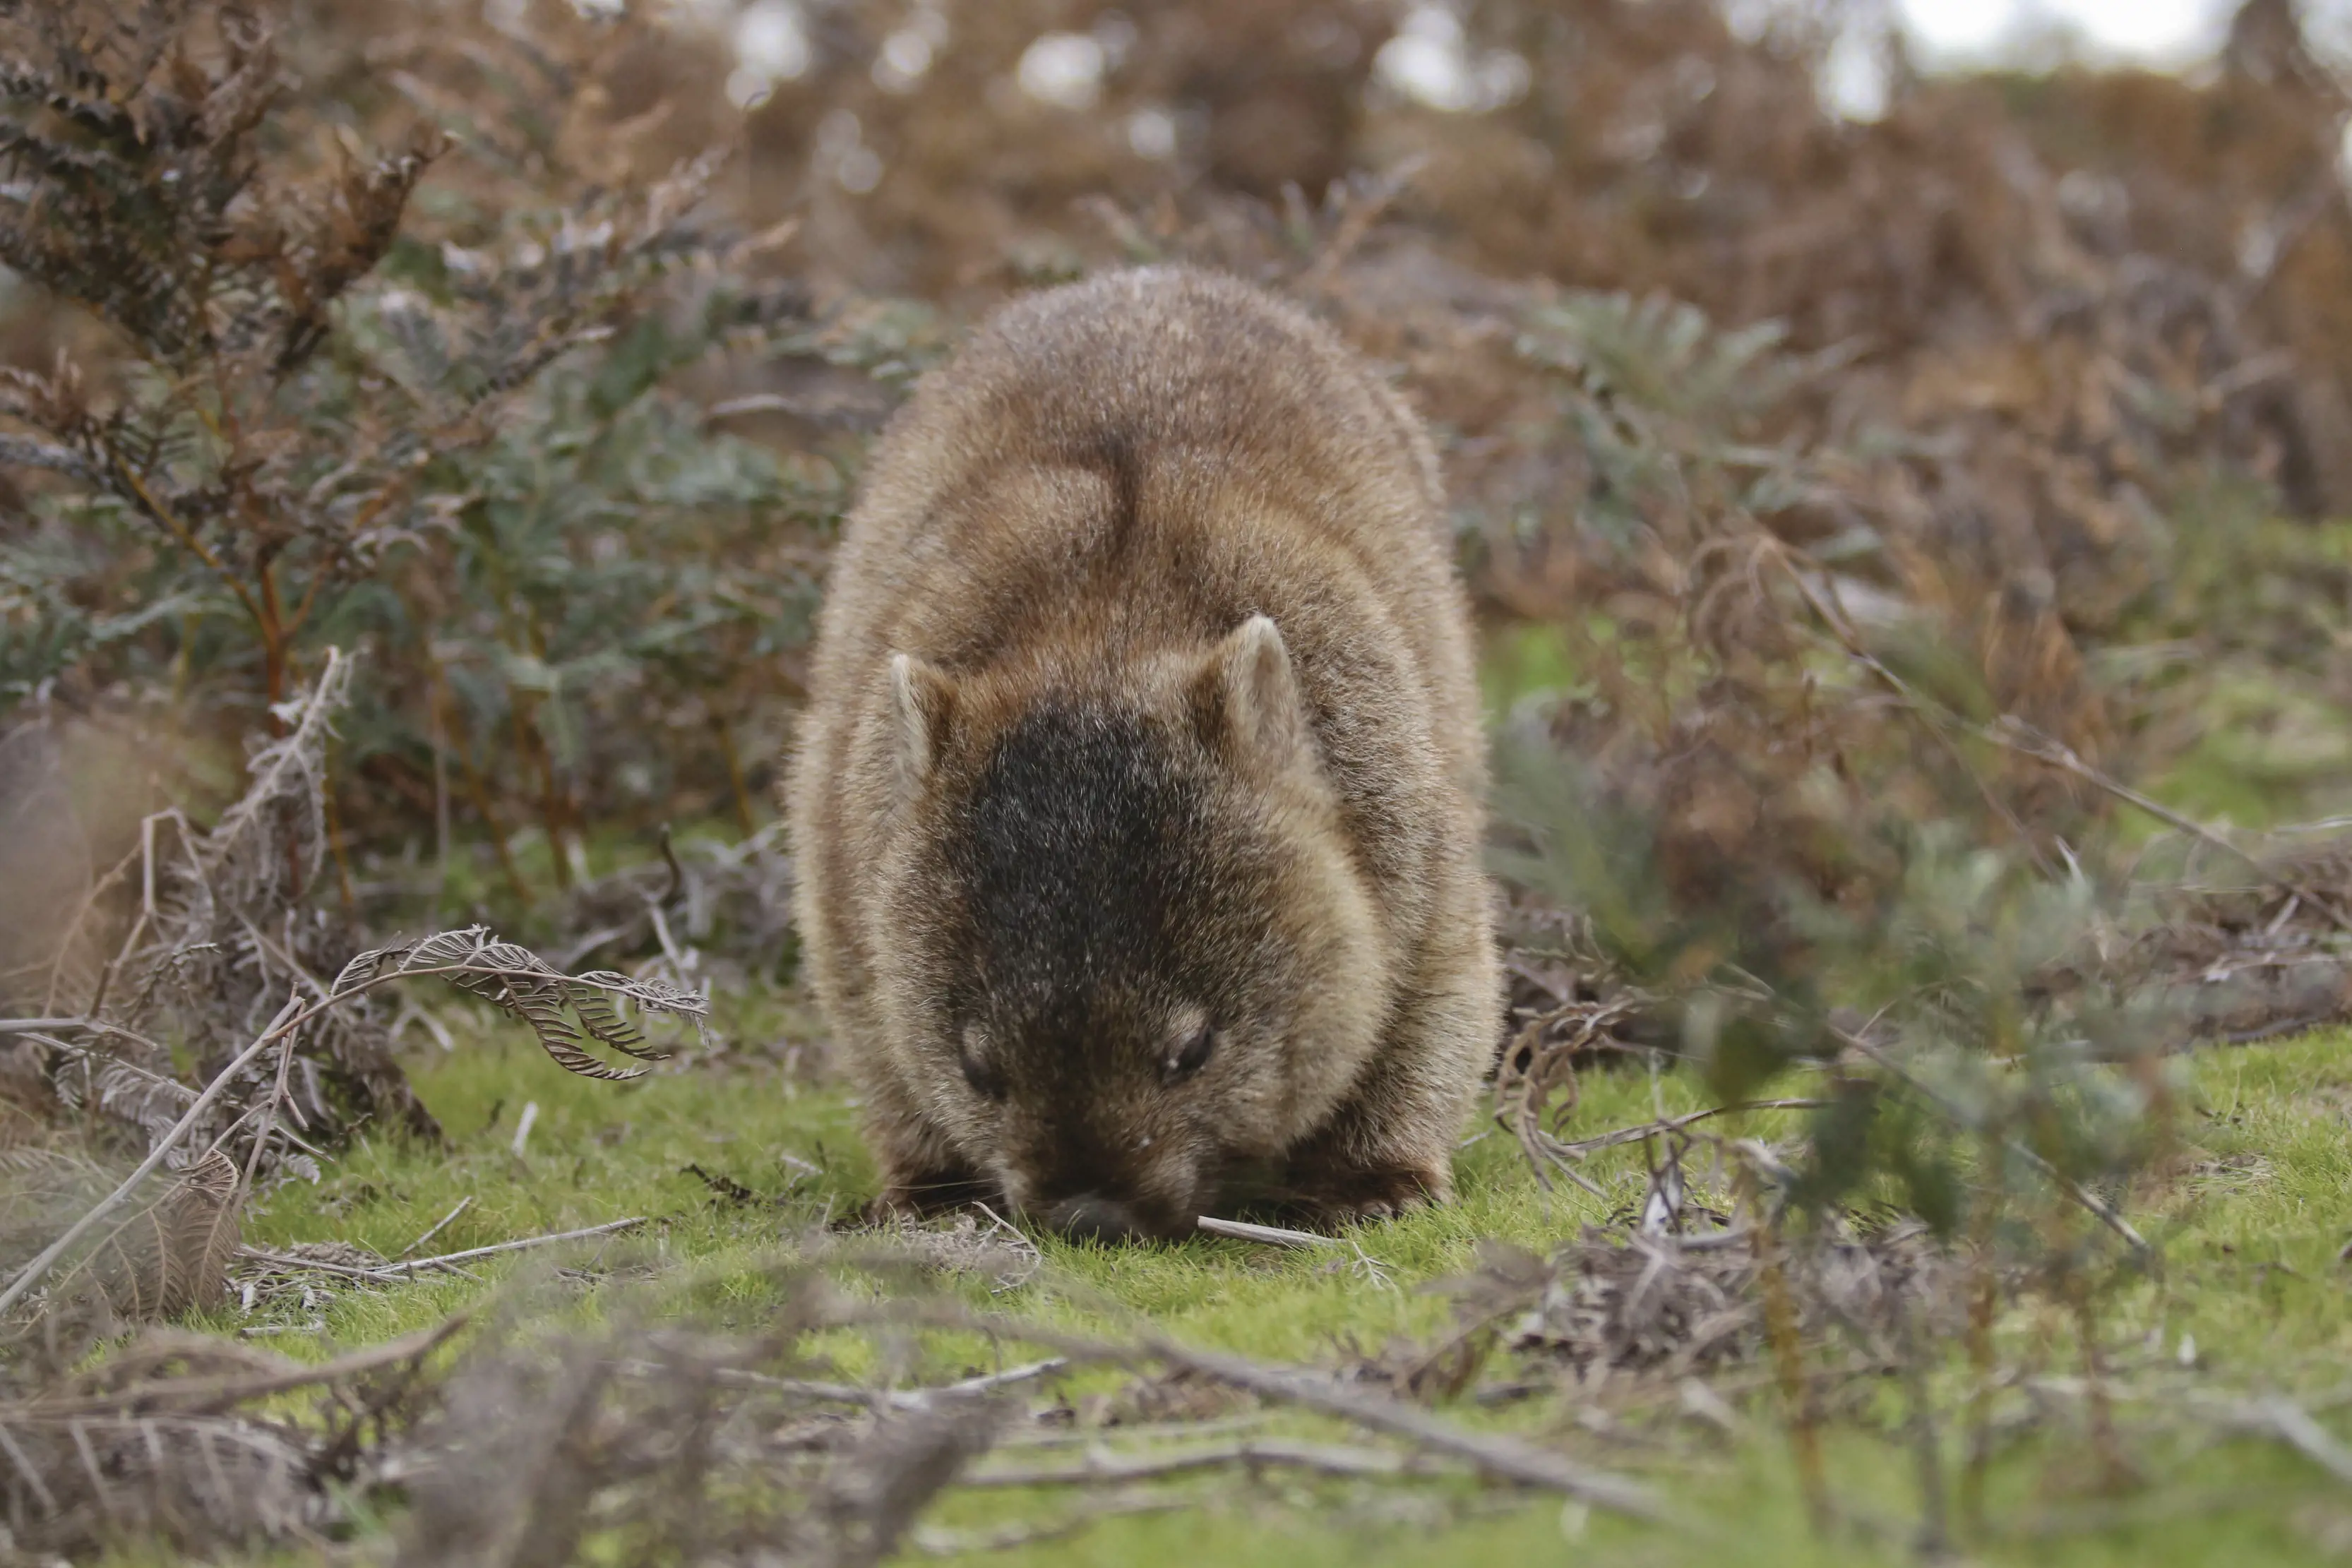 Image of a wombat surrounded by bushland.